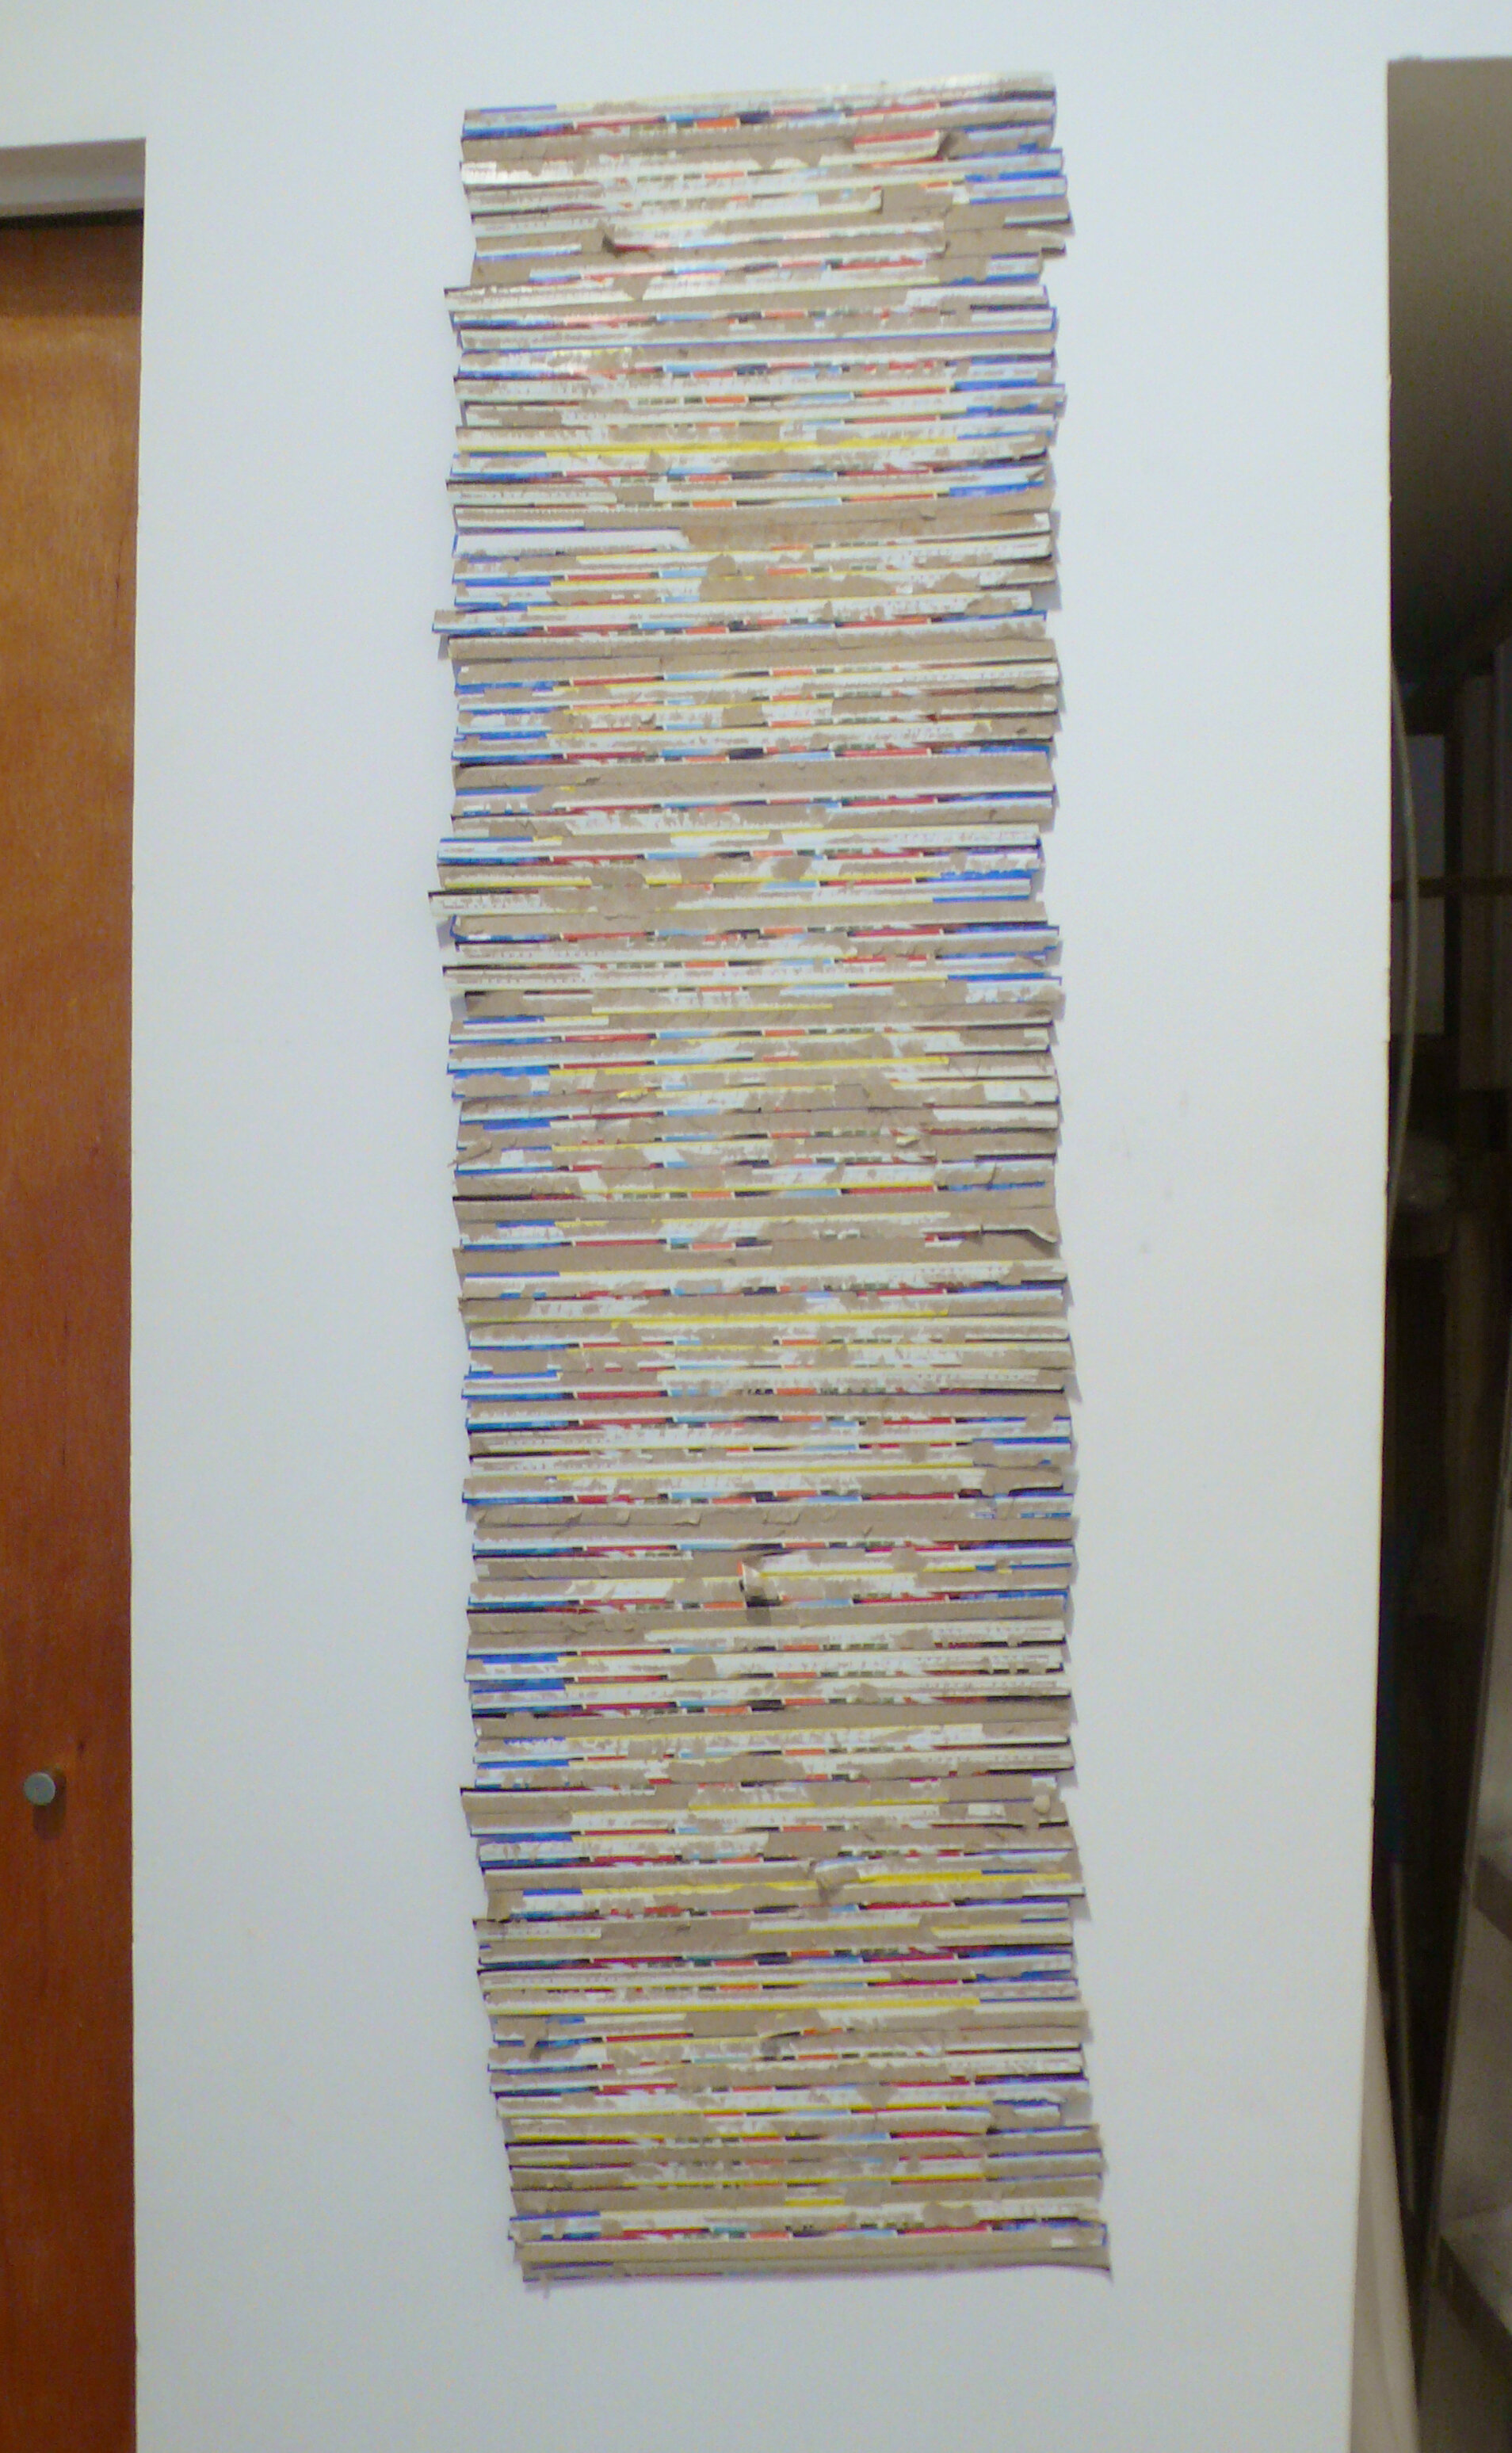 Installation image from the 2010 exhibition, Carlos Sandoval De Leon, at Cindy Rucker Gallery